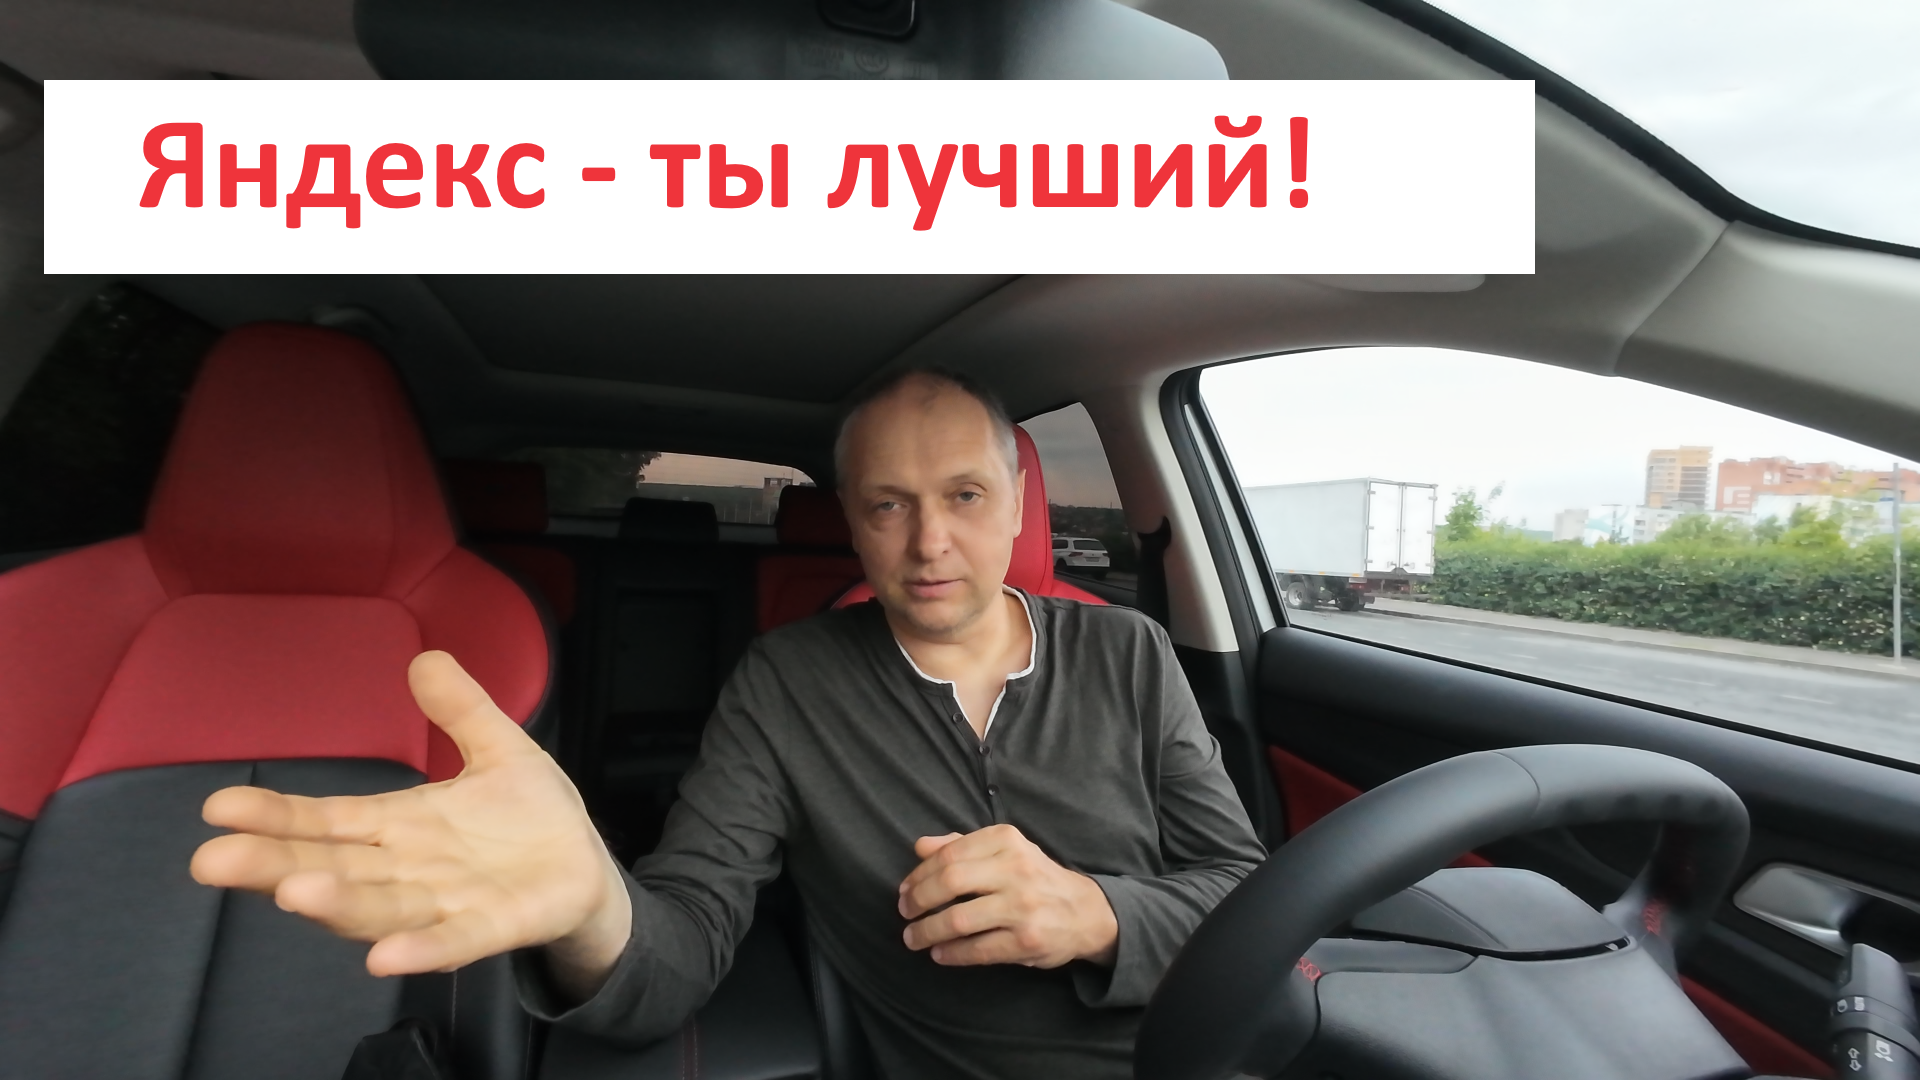 Спасибо "Яндекс Такси" за работу.